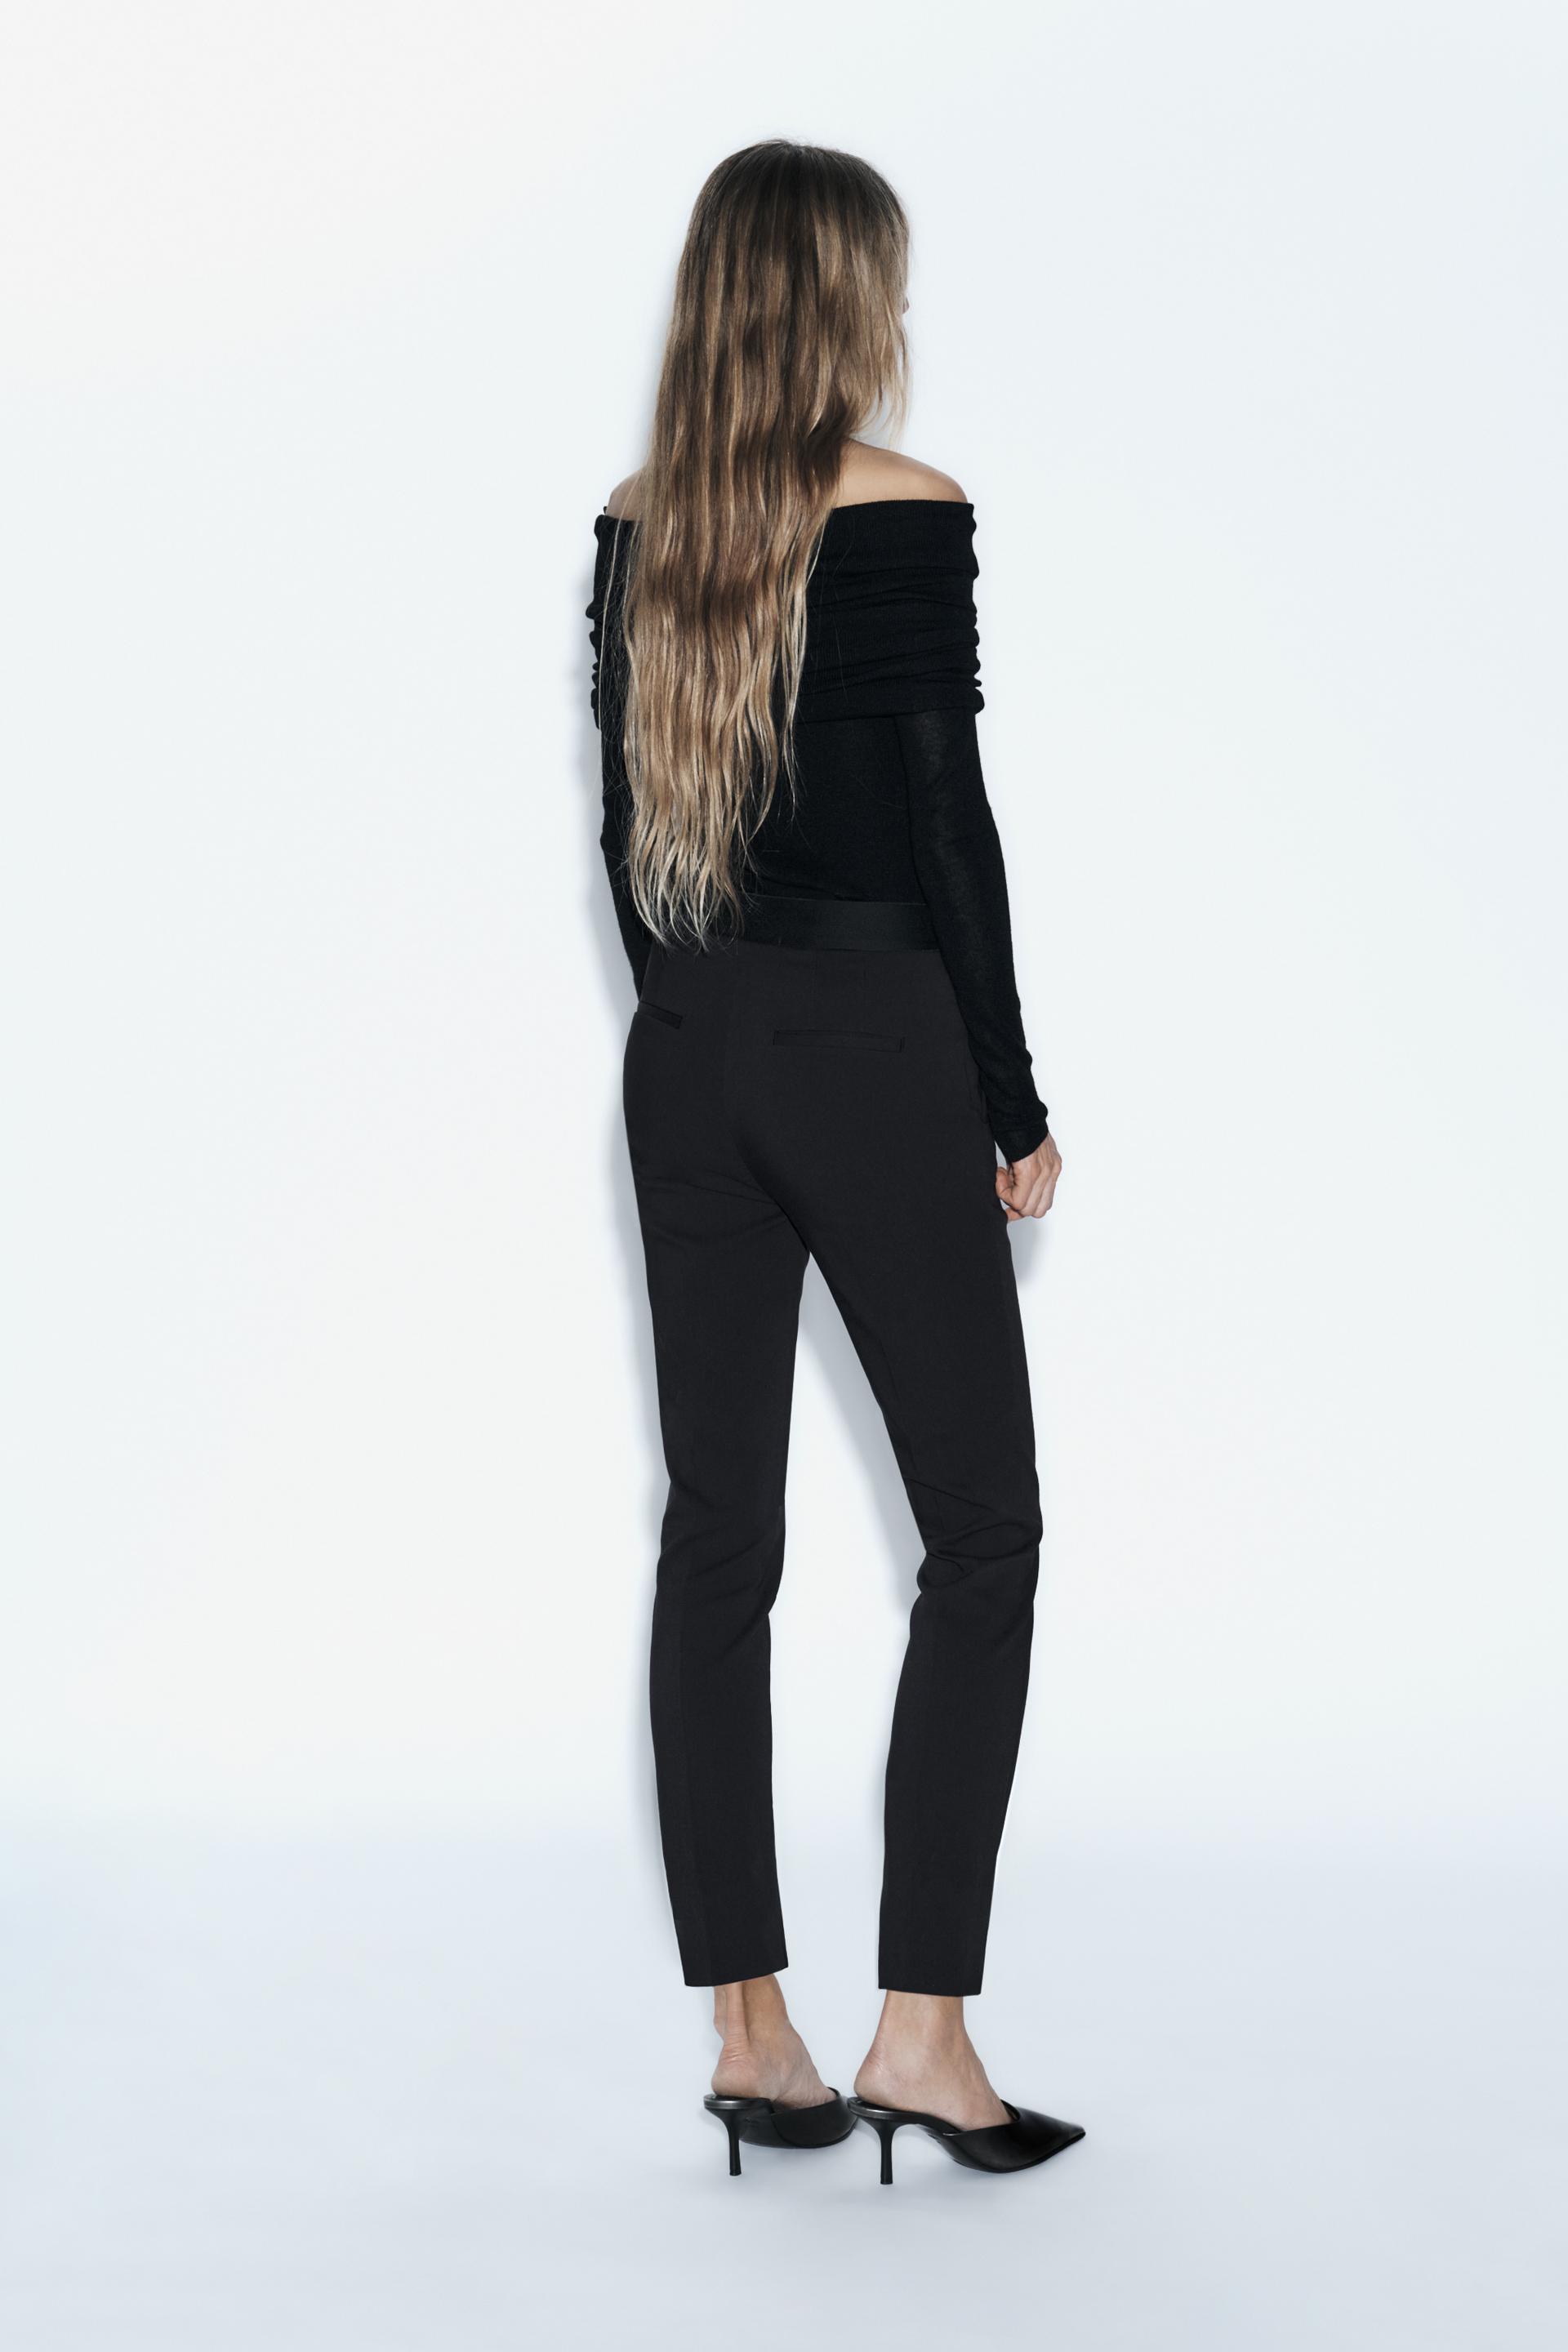 Zara Zara TRF HIGH RISE BARREL LEG JEANS 49.90